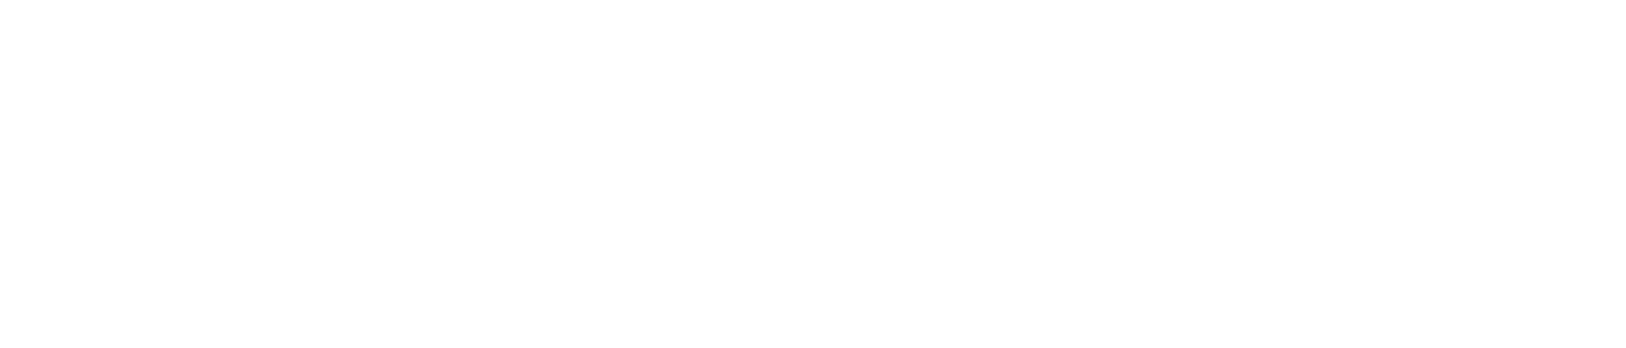 Matt Five,Best Marketing Management in Dubai,PR strategies